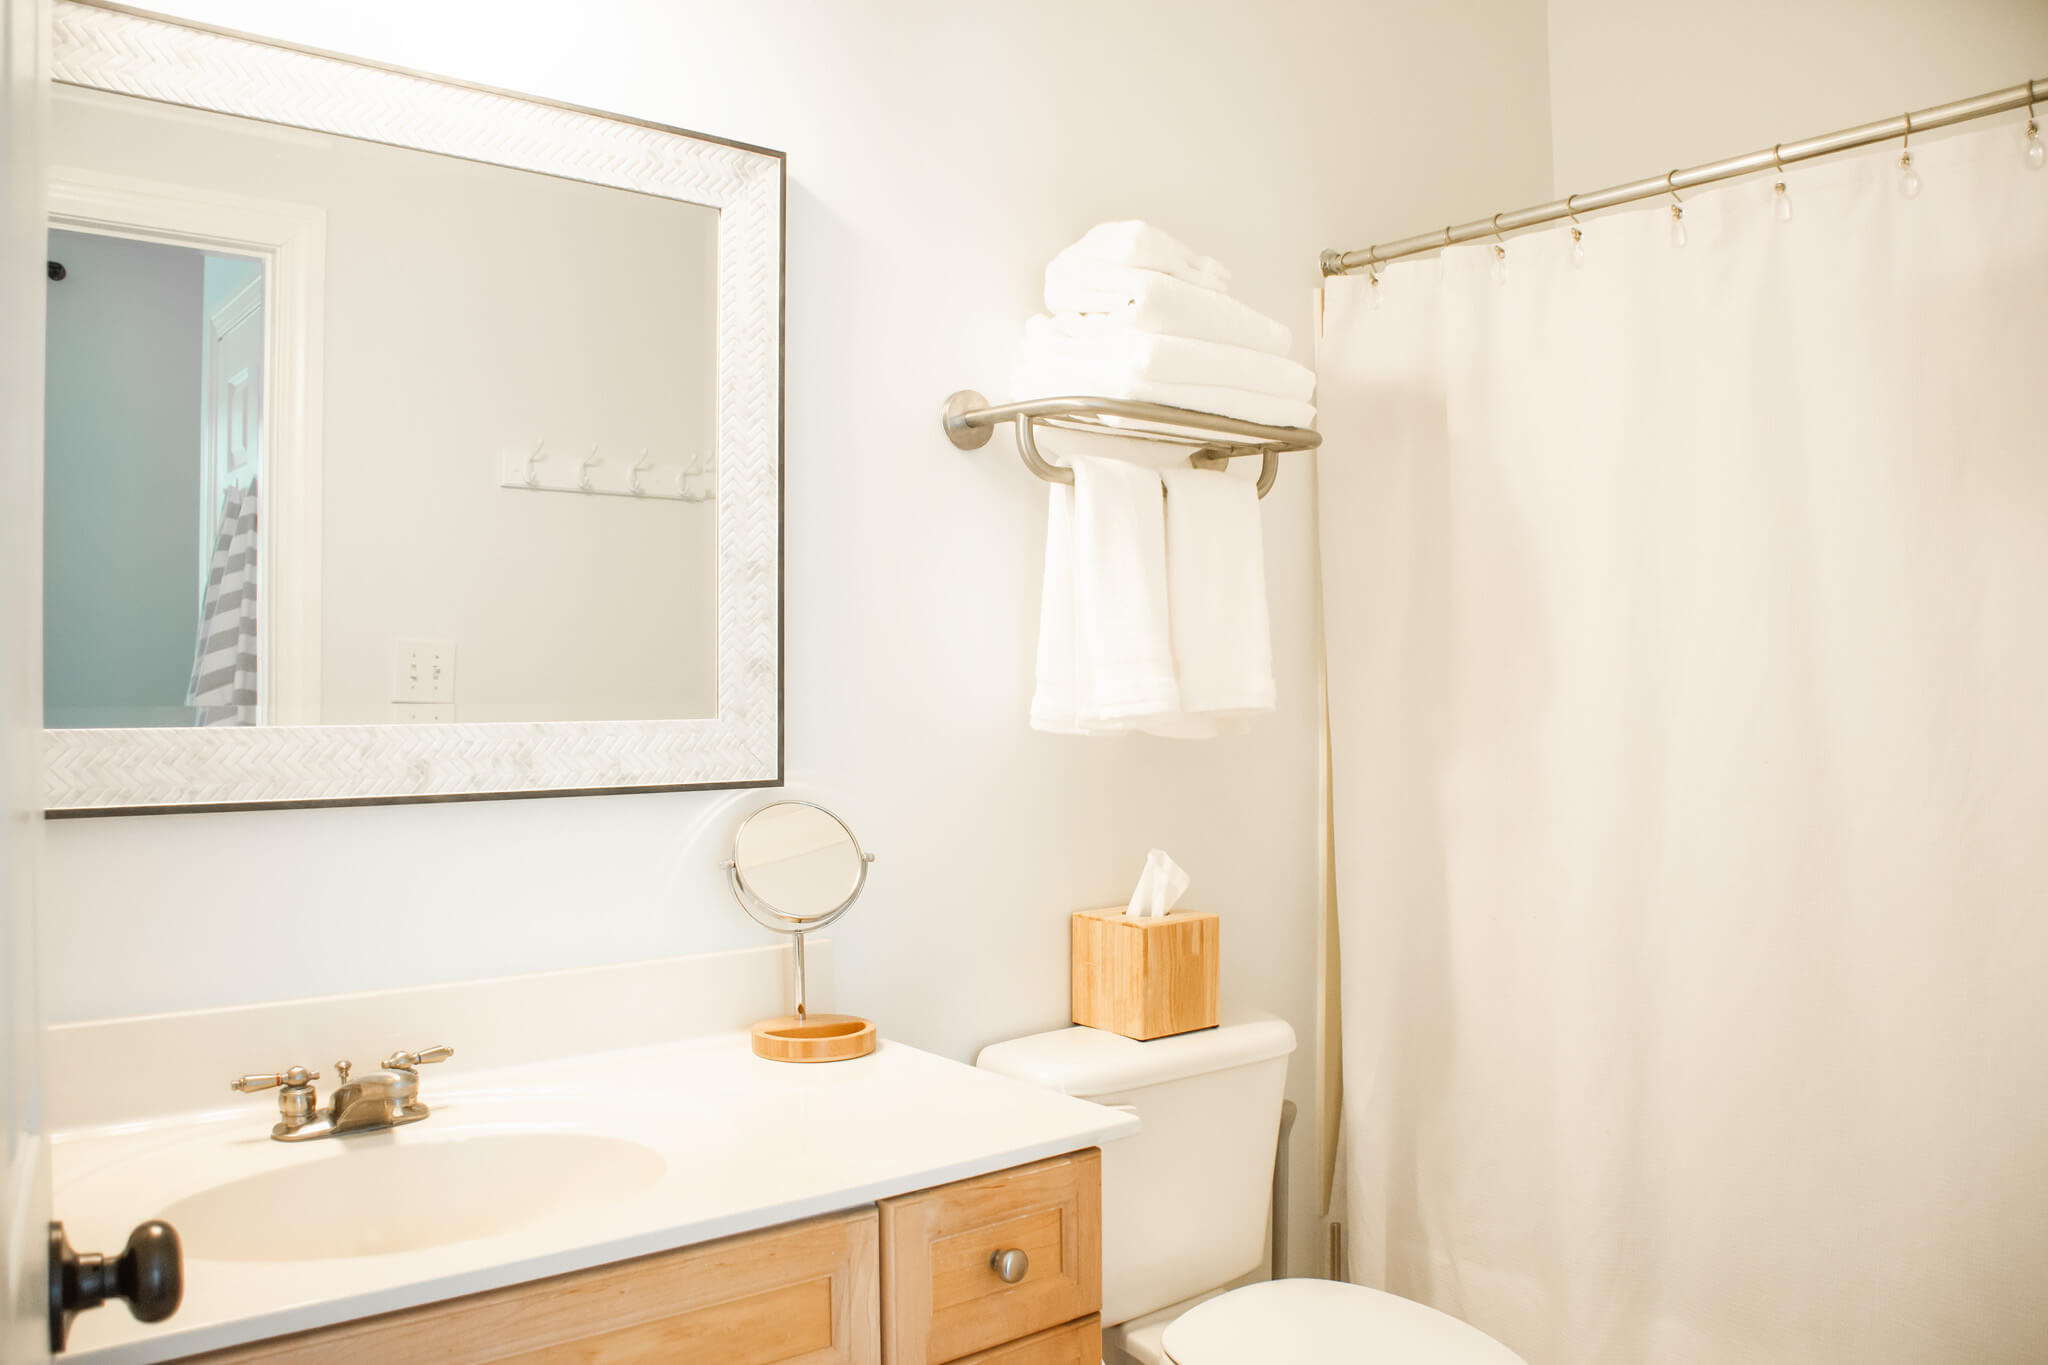 Hotel Quality Towels - Bathroom Towel Bundles for Airbnb